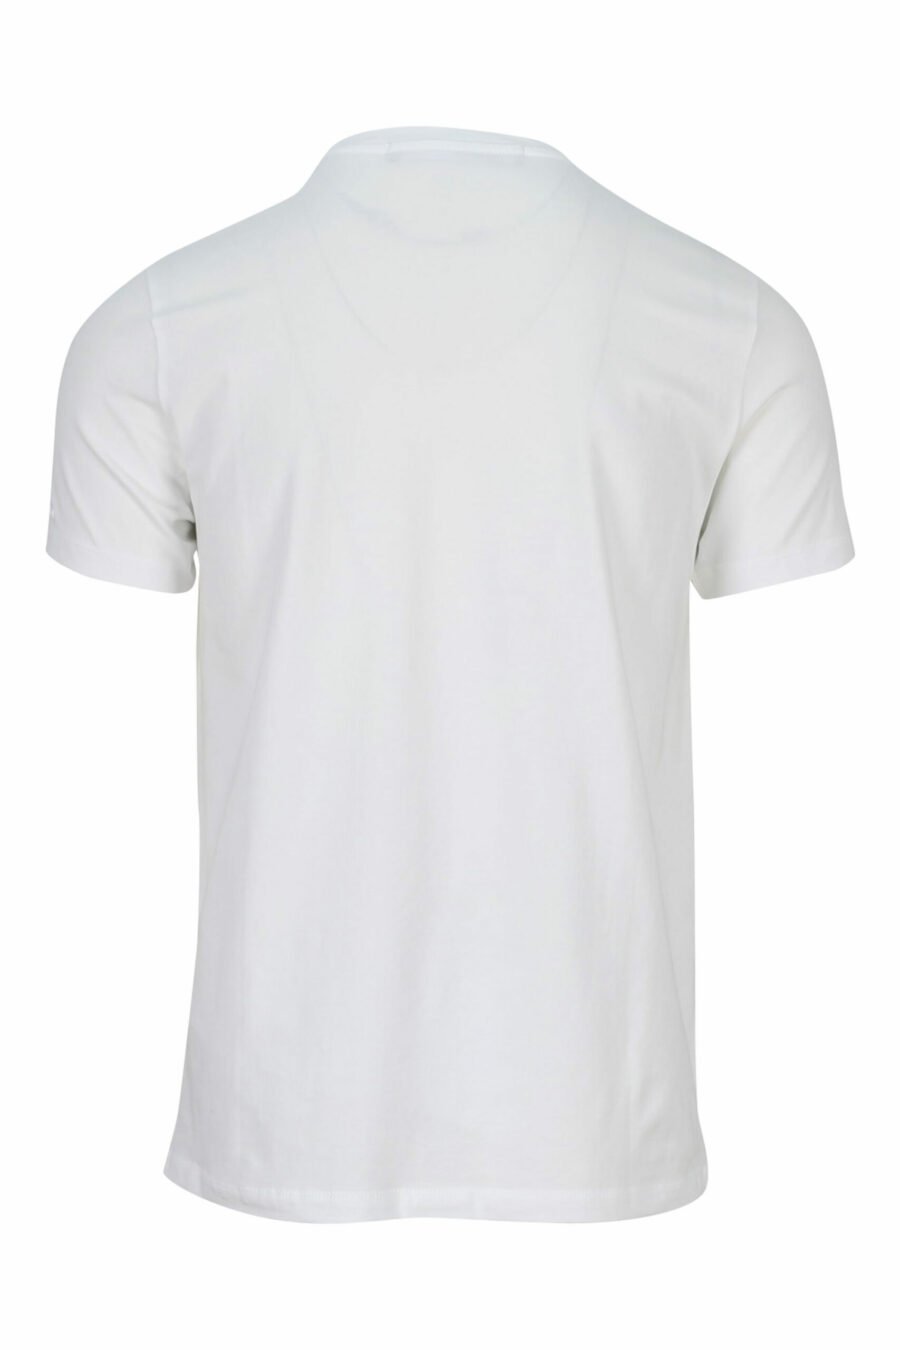 T-shirt blanc avec maxilogo multicolore "karl silhouette" - 4062226400701 scaled